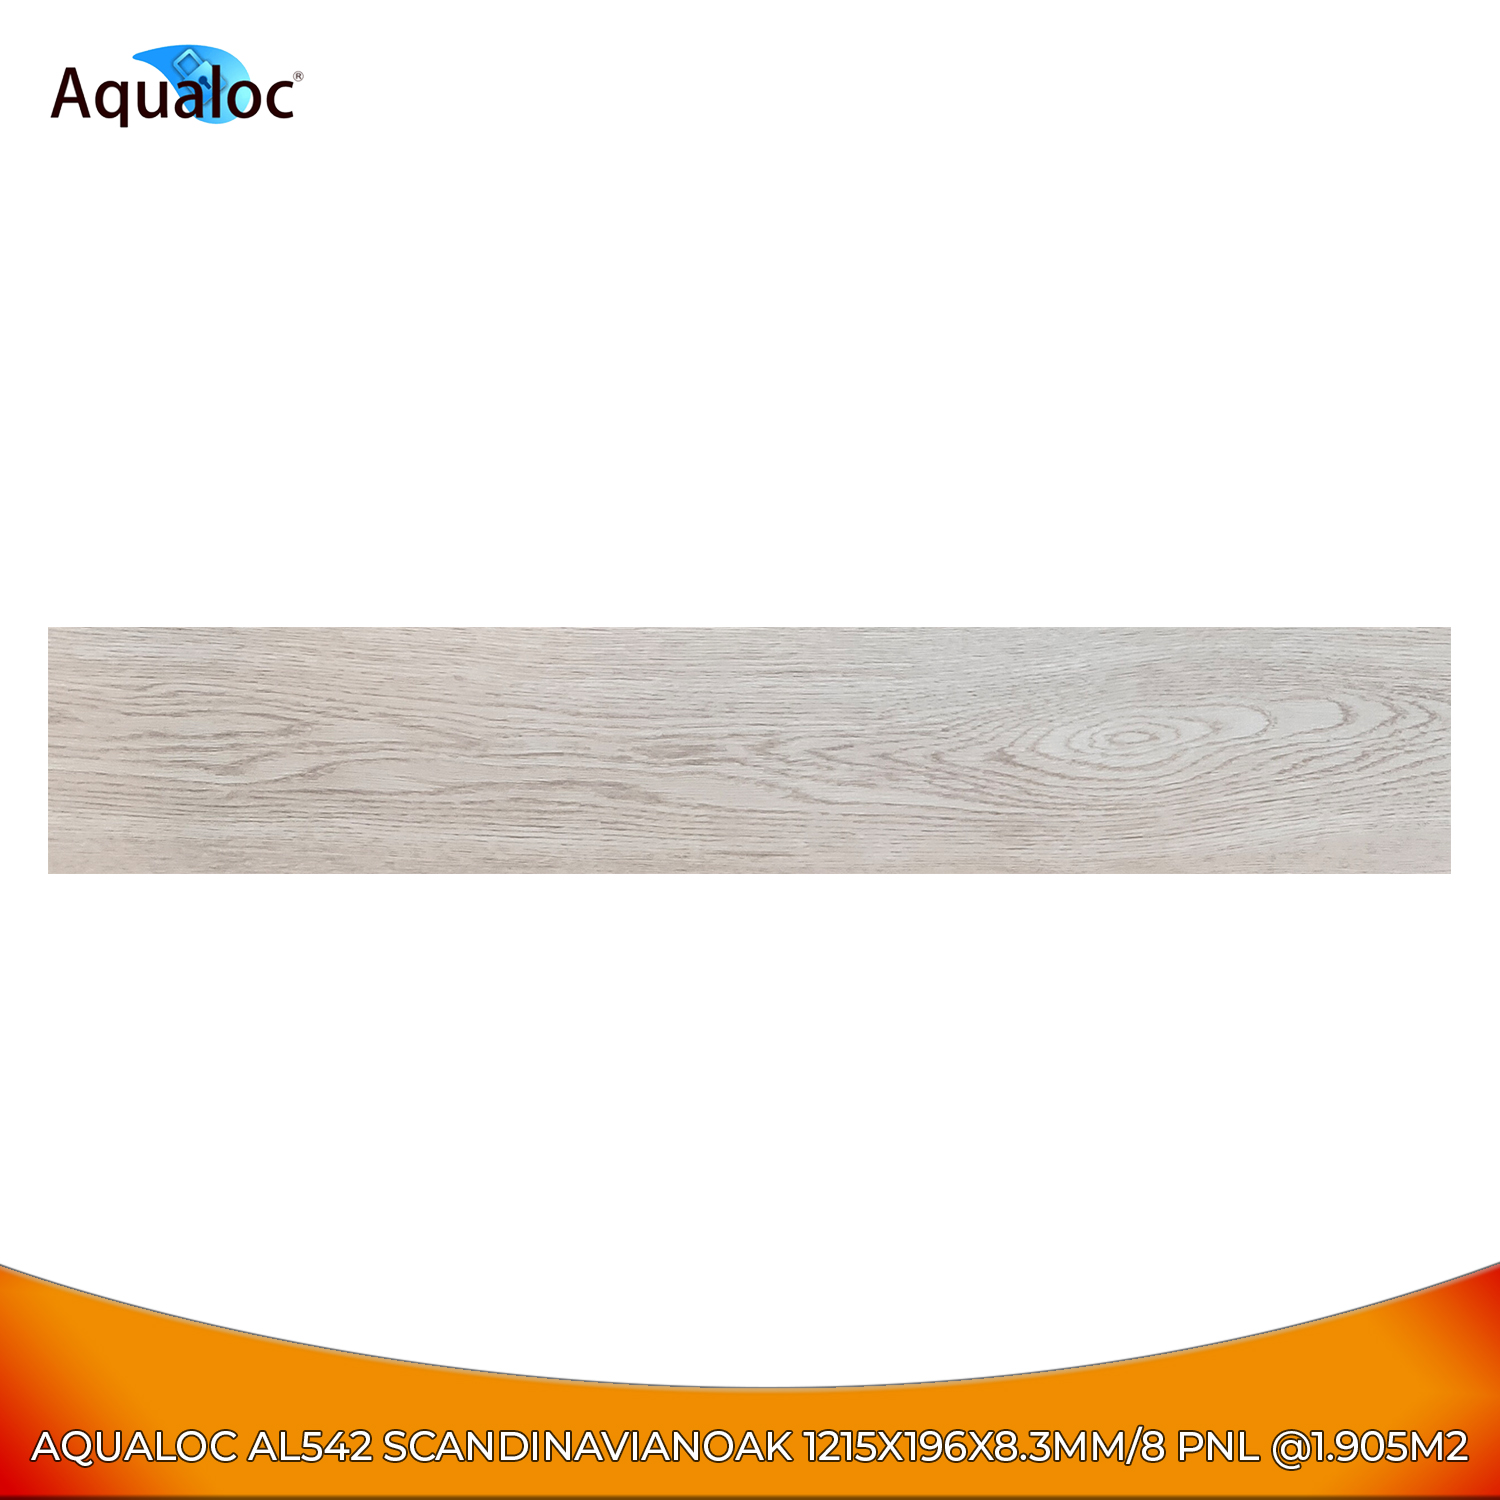 Aqualoc Vinyl CLick AL542 1215X196X8.3MM - Lantai Kayu